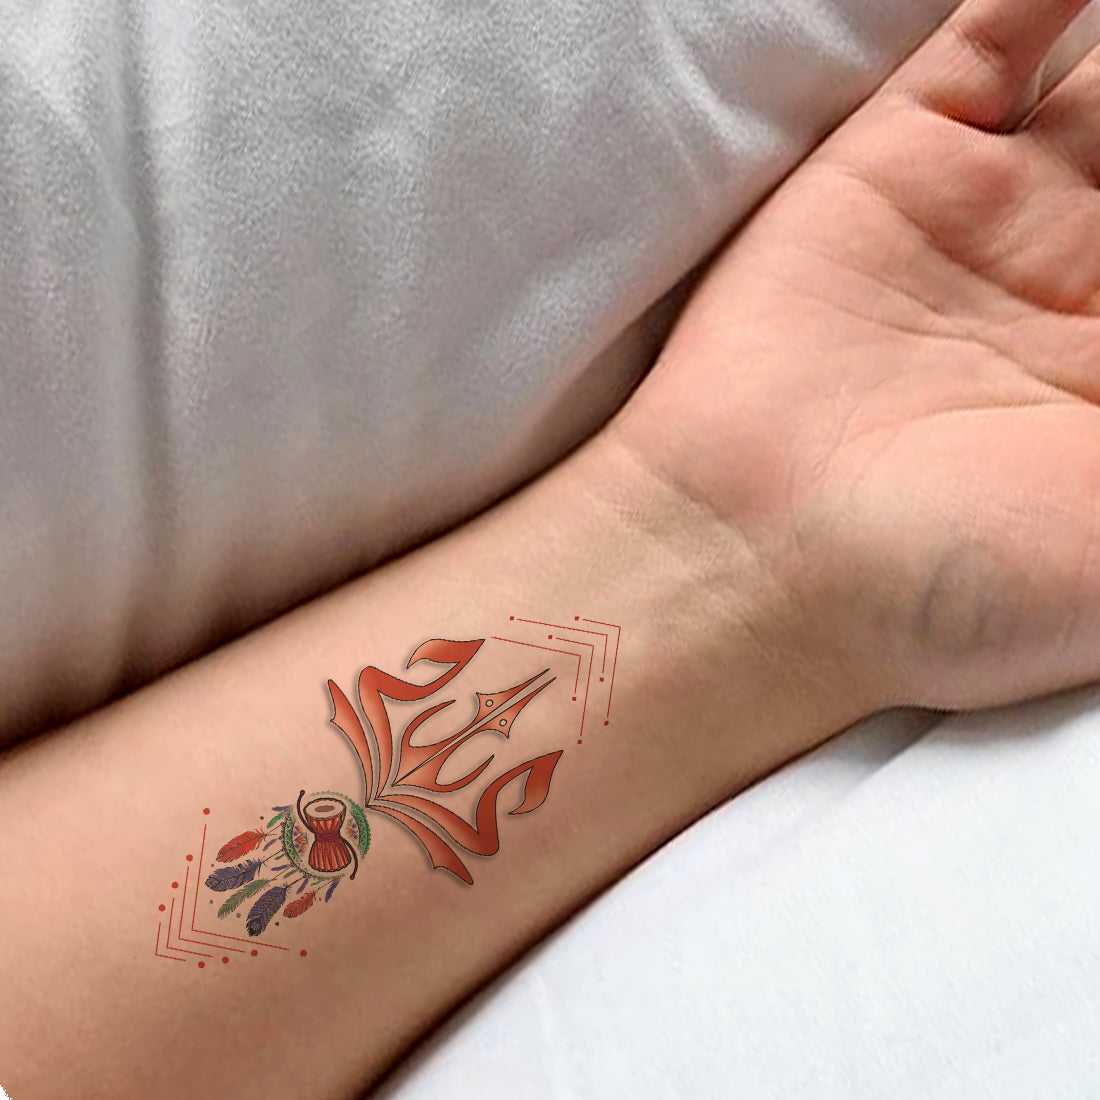 Tattoo uploaded by Ratan chaudhary • Trishul damru with mrutyunjay mantra  handband tattoo • Tattoodo